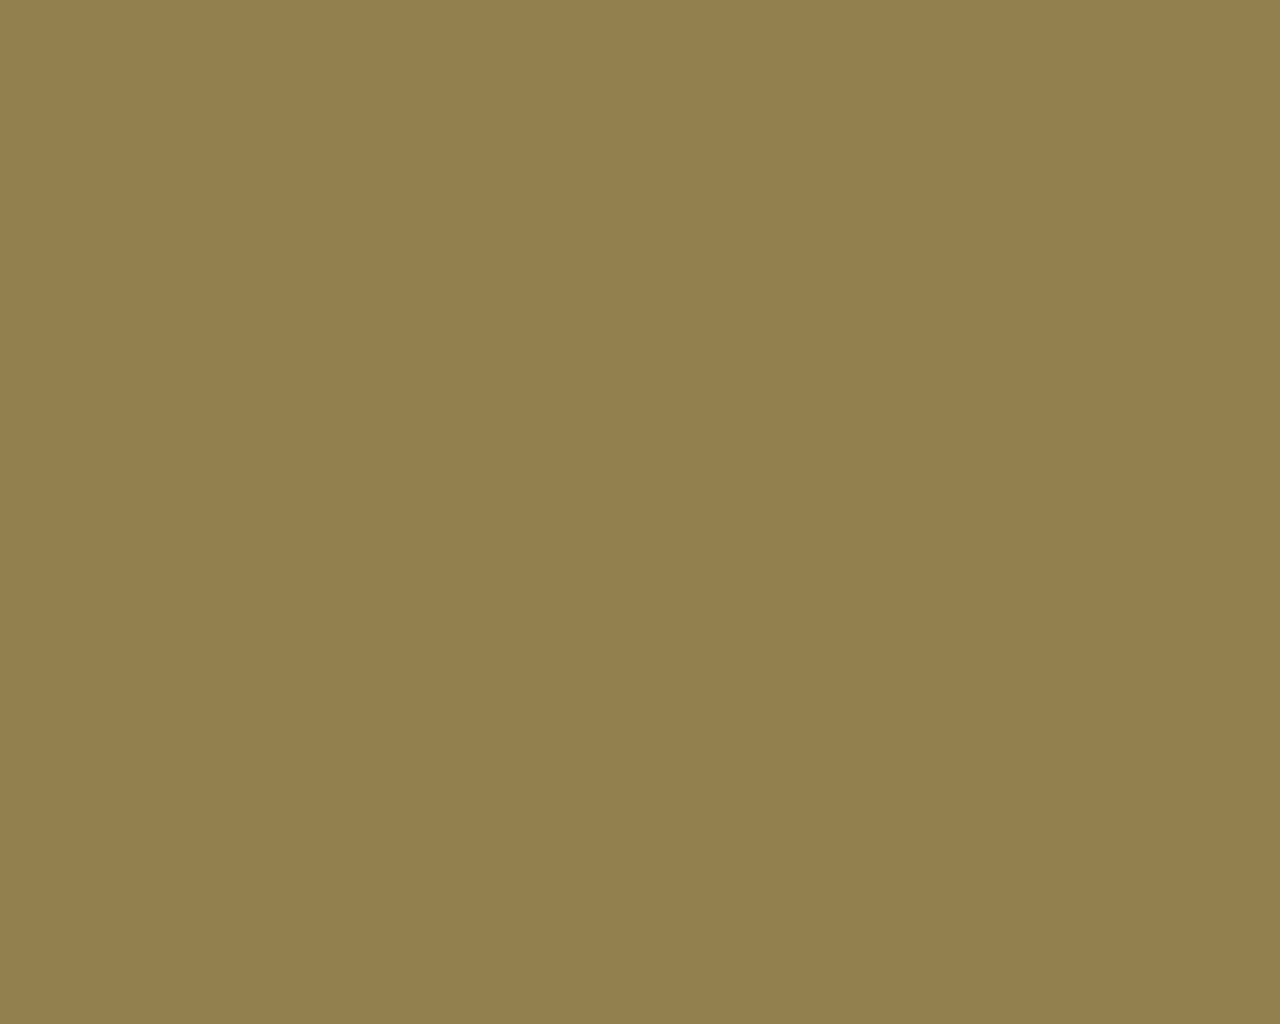 1280x1024 Dark Tan Solid Color Background